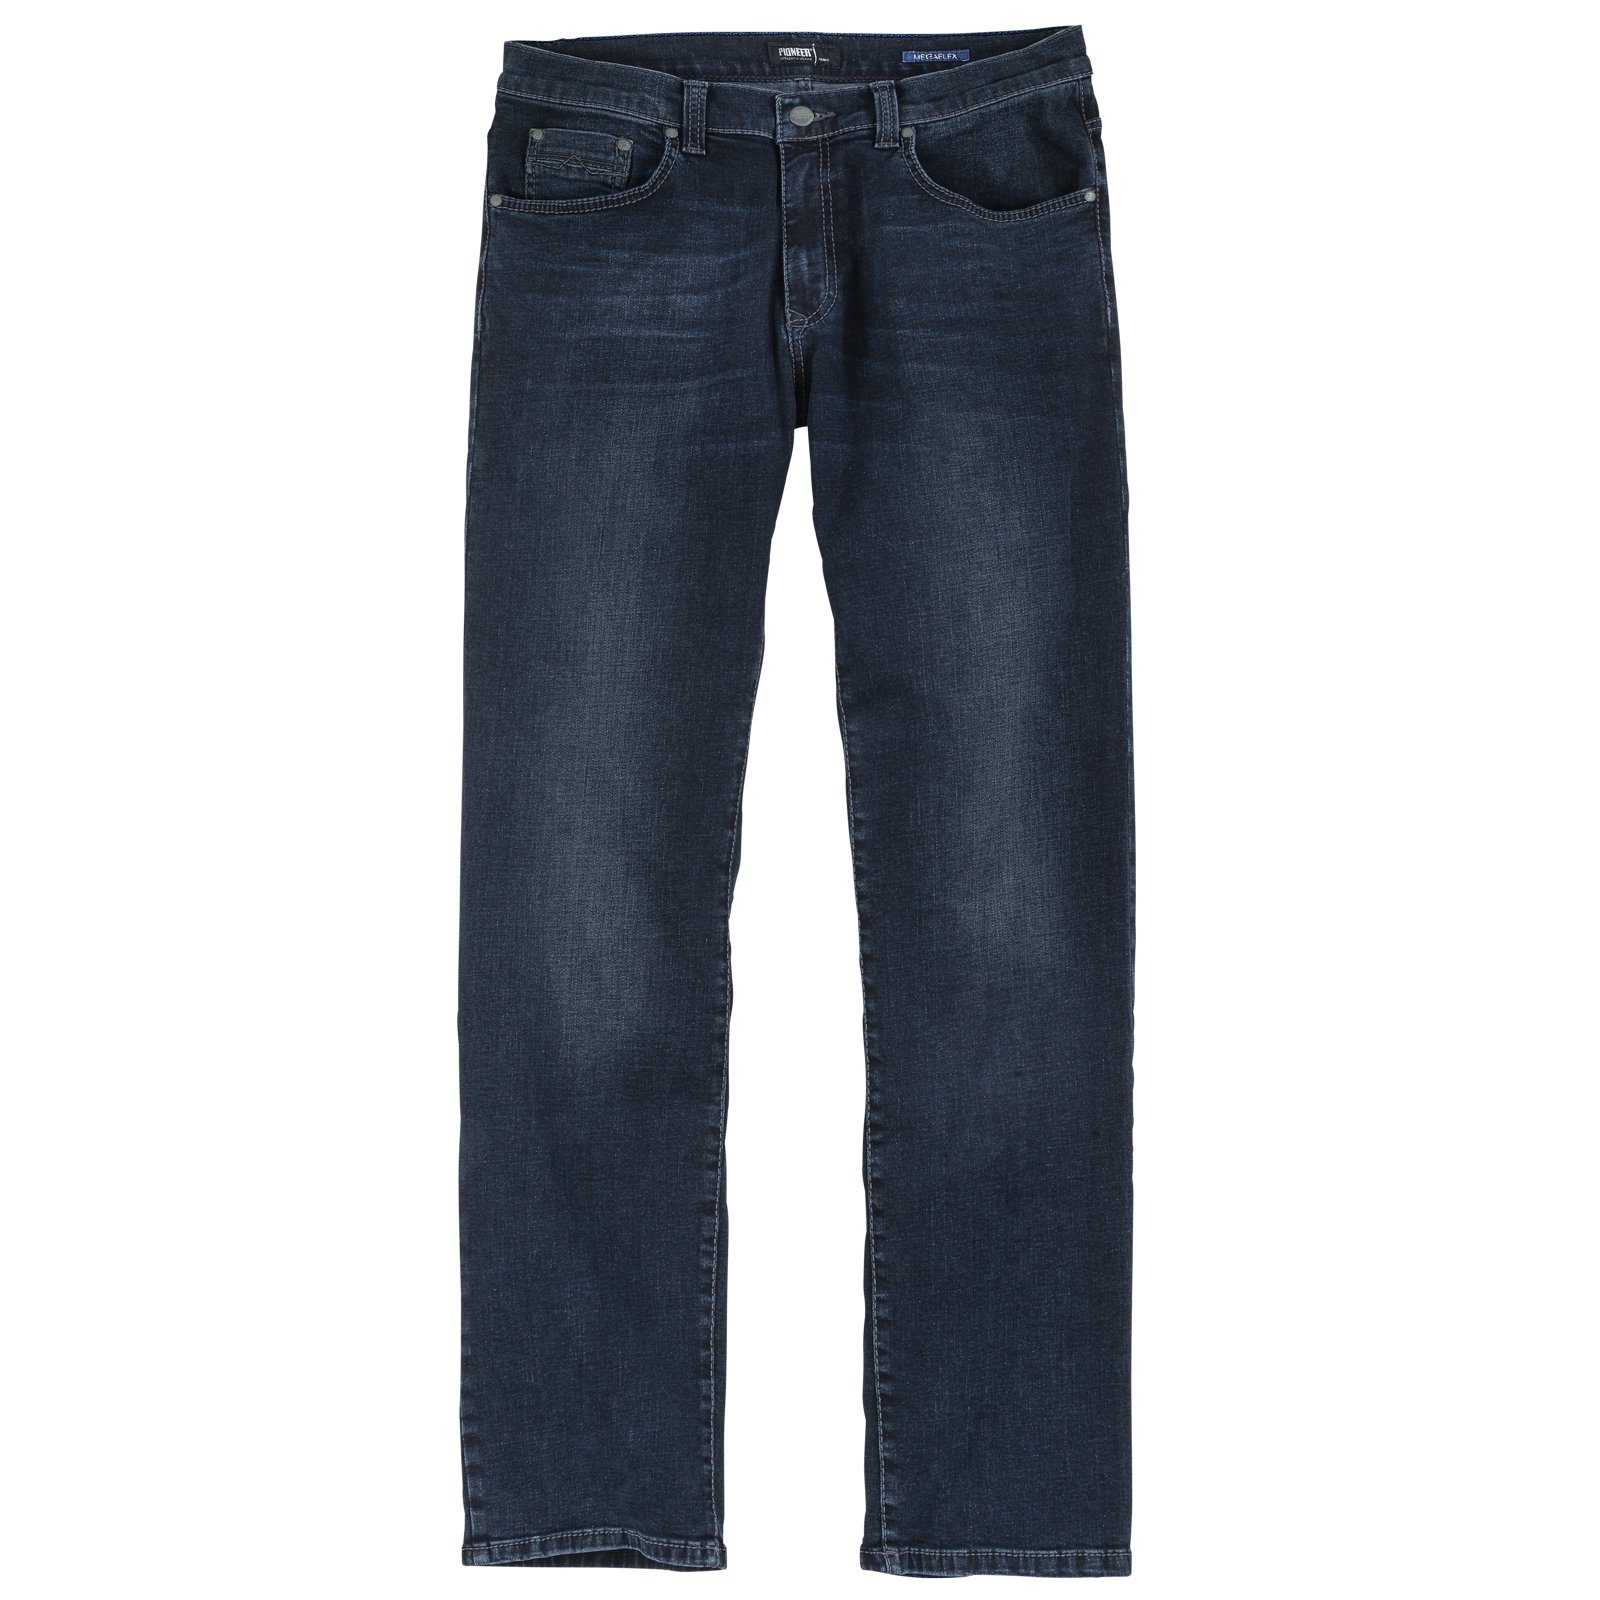 Pionier Bequeme Jeans Große Größen used Pioneer blue/black Rando Stretch-Jeans buffies